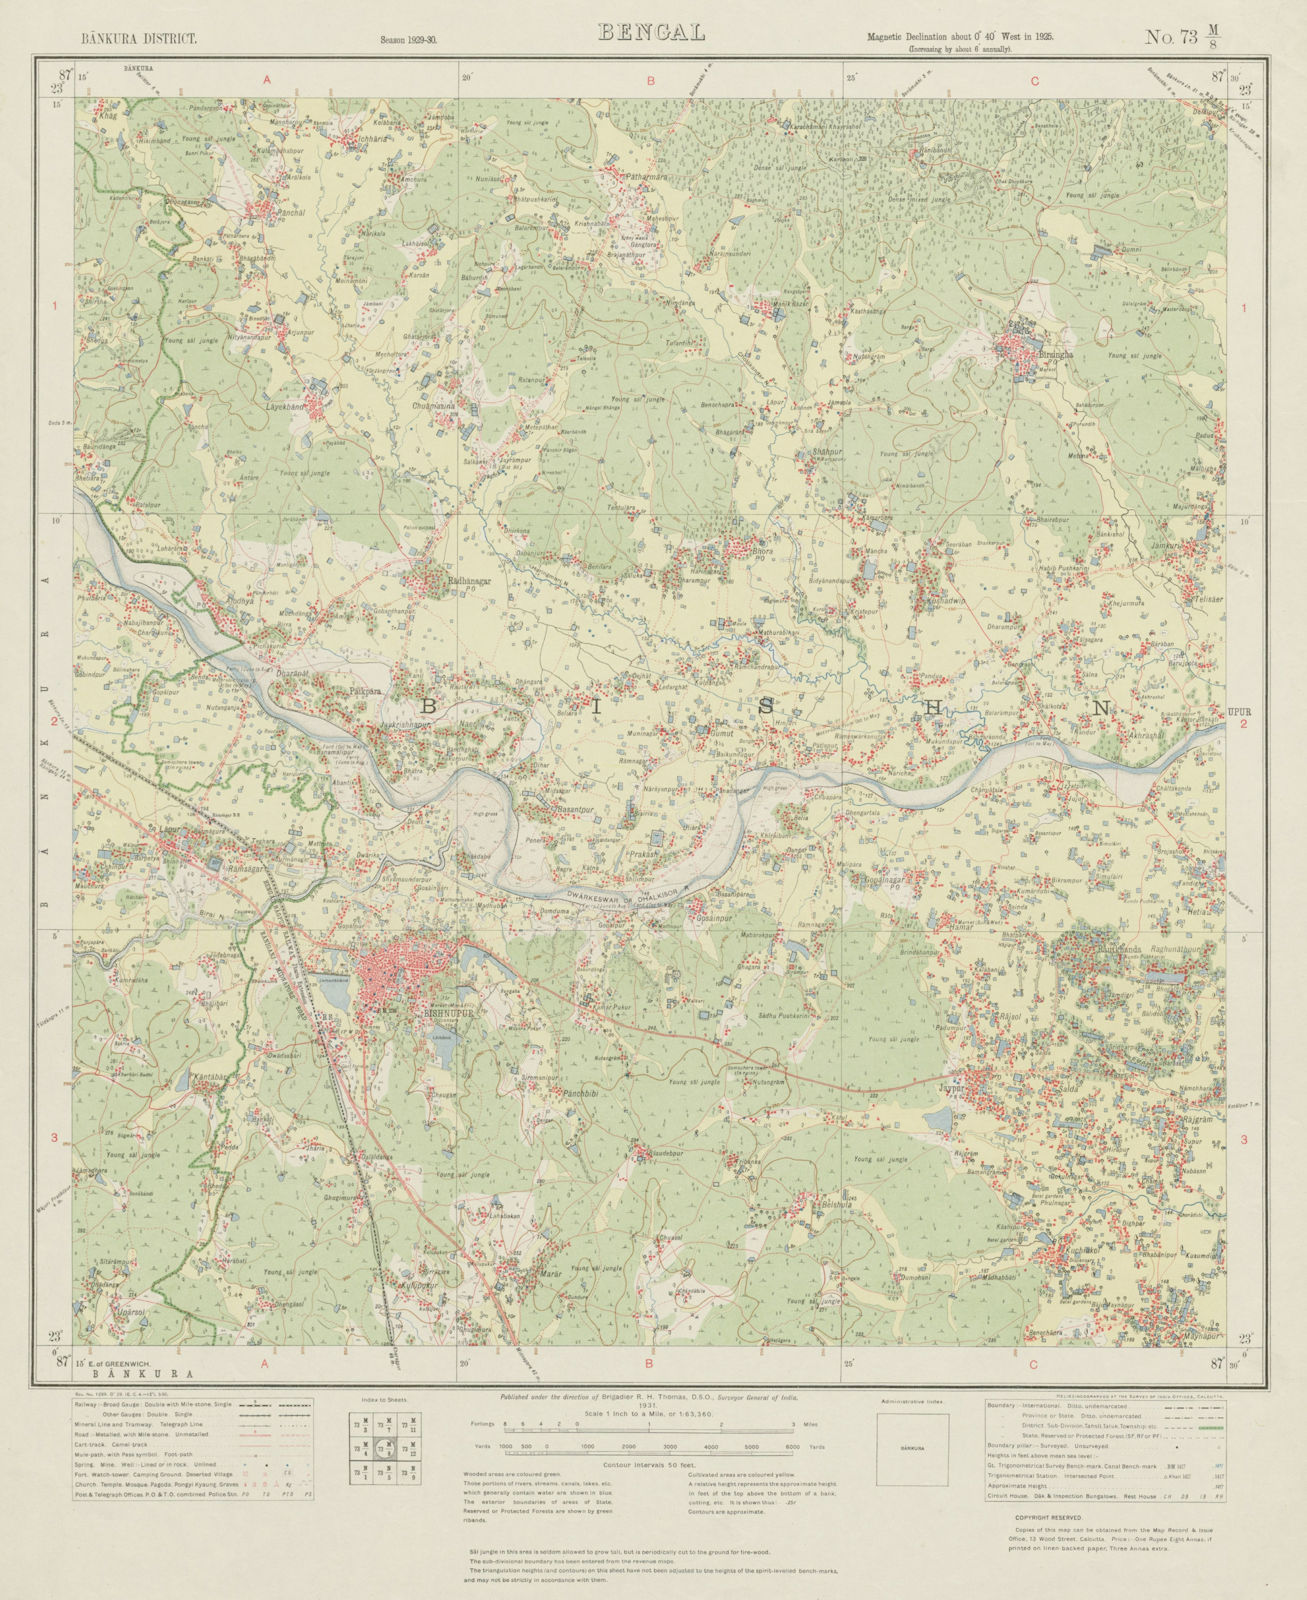 SURVEY OF INDIA 73 M/8 West Bengal Bishnupur Joypur Birsingha Ramsagar 1931 map